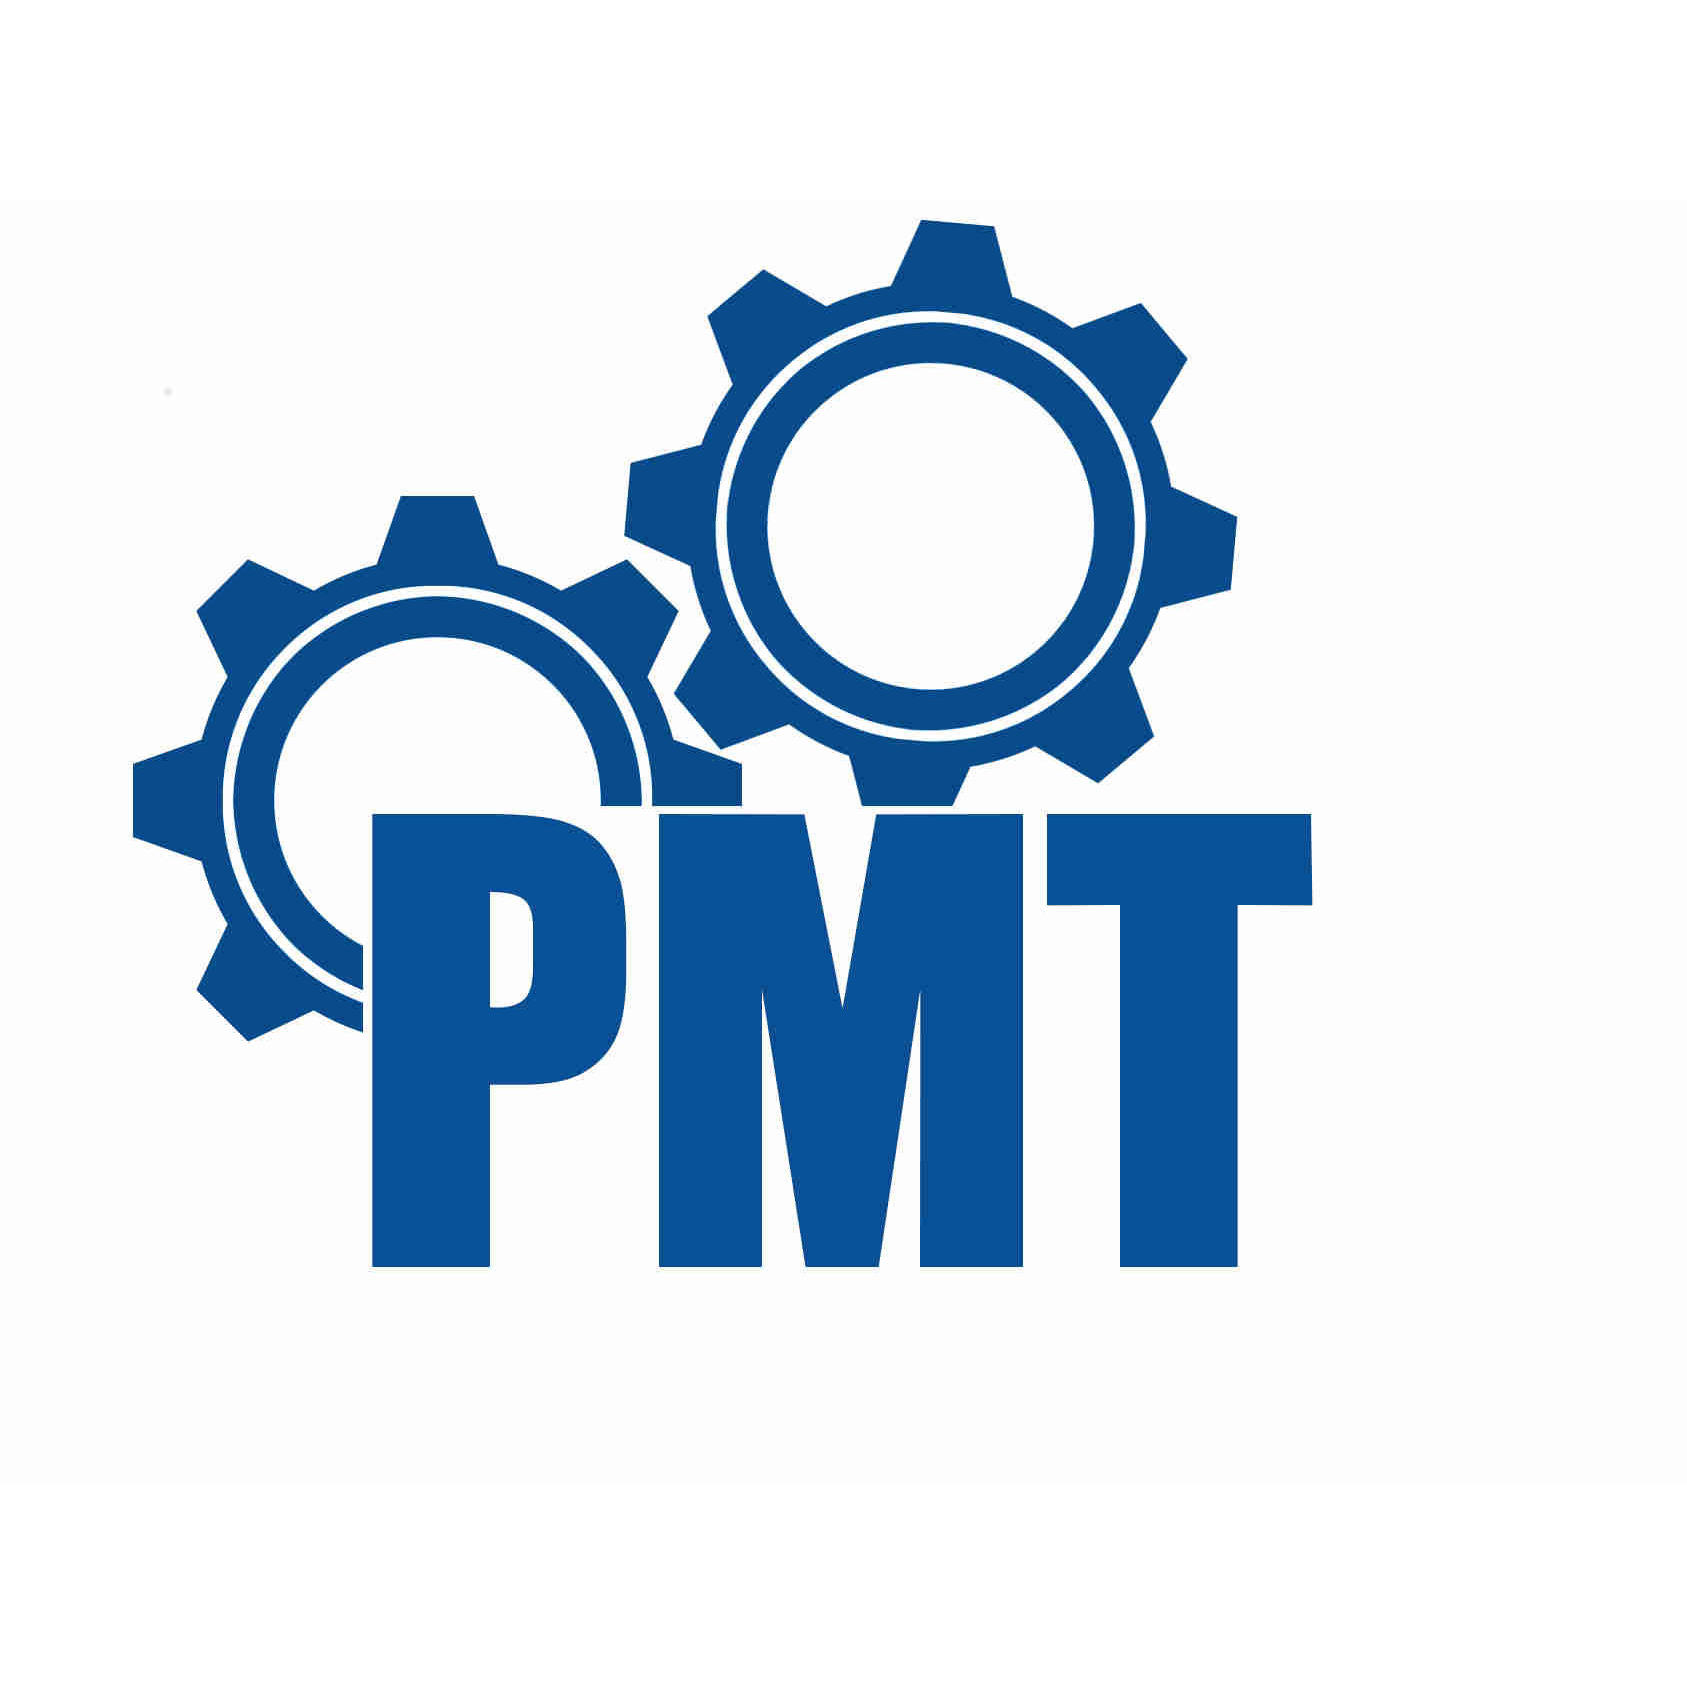 Logo PMT GmbH